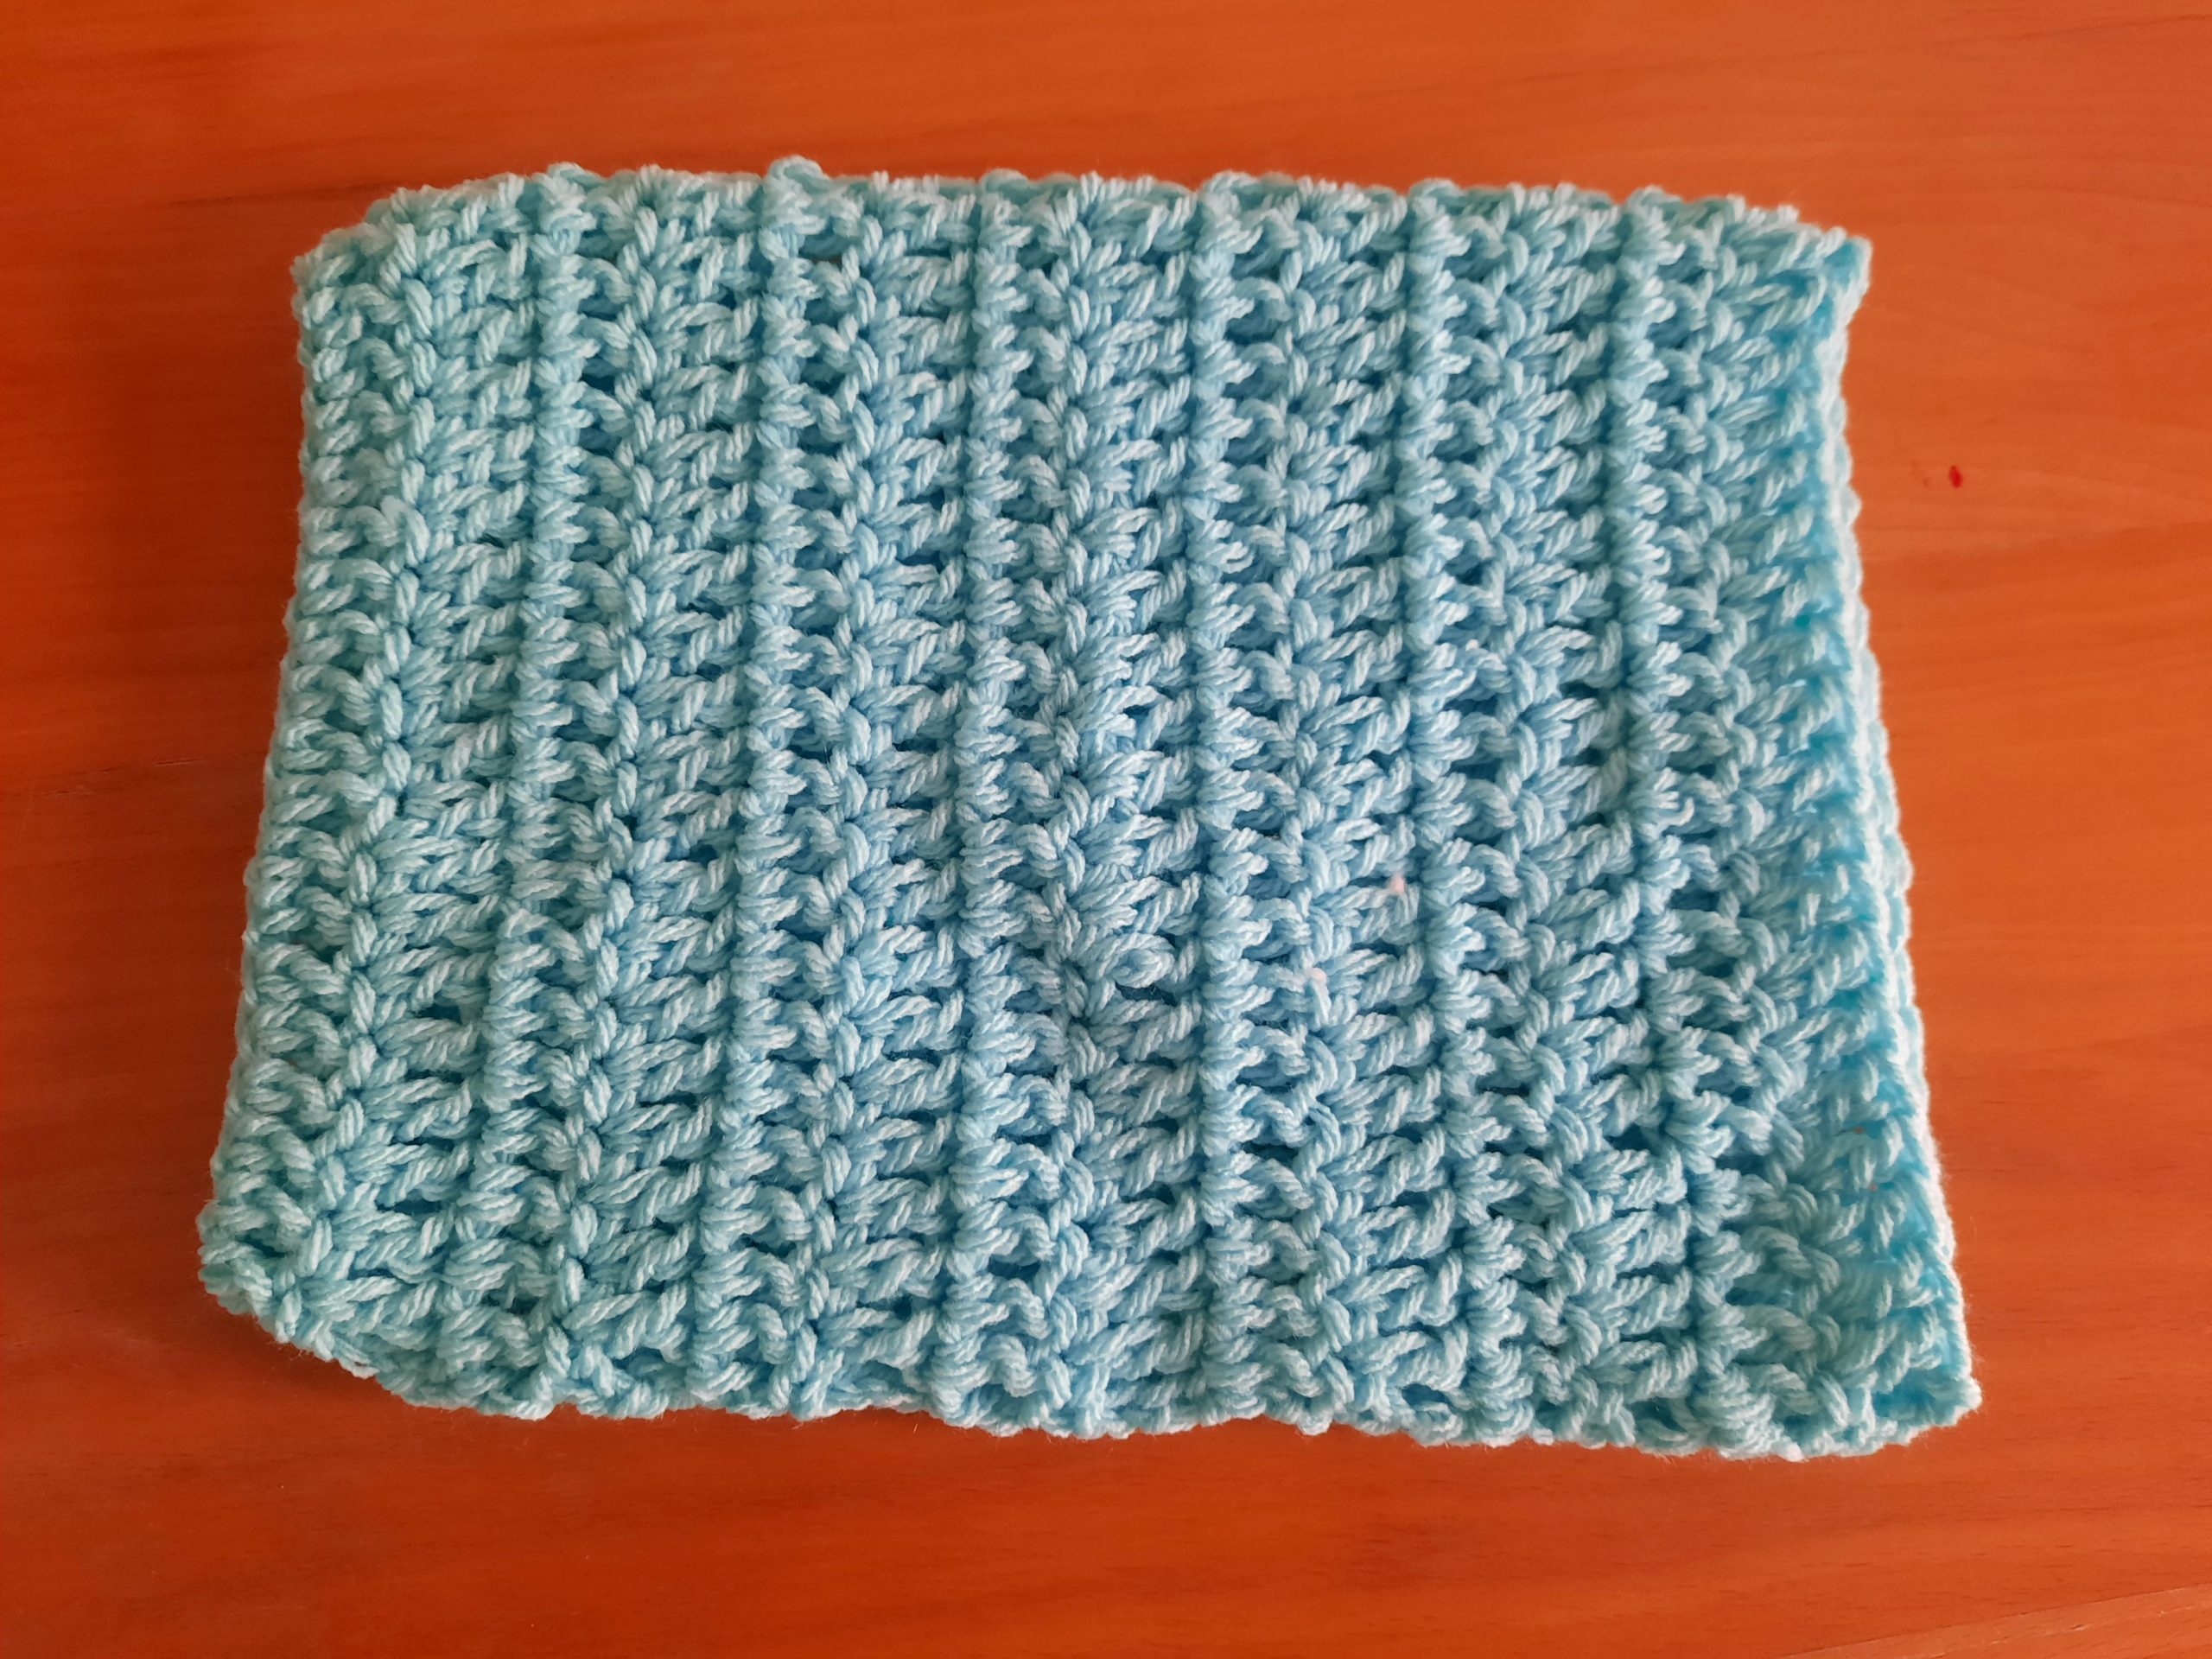 Crochet sleeve